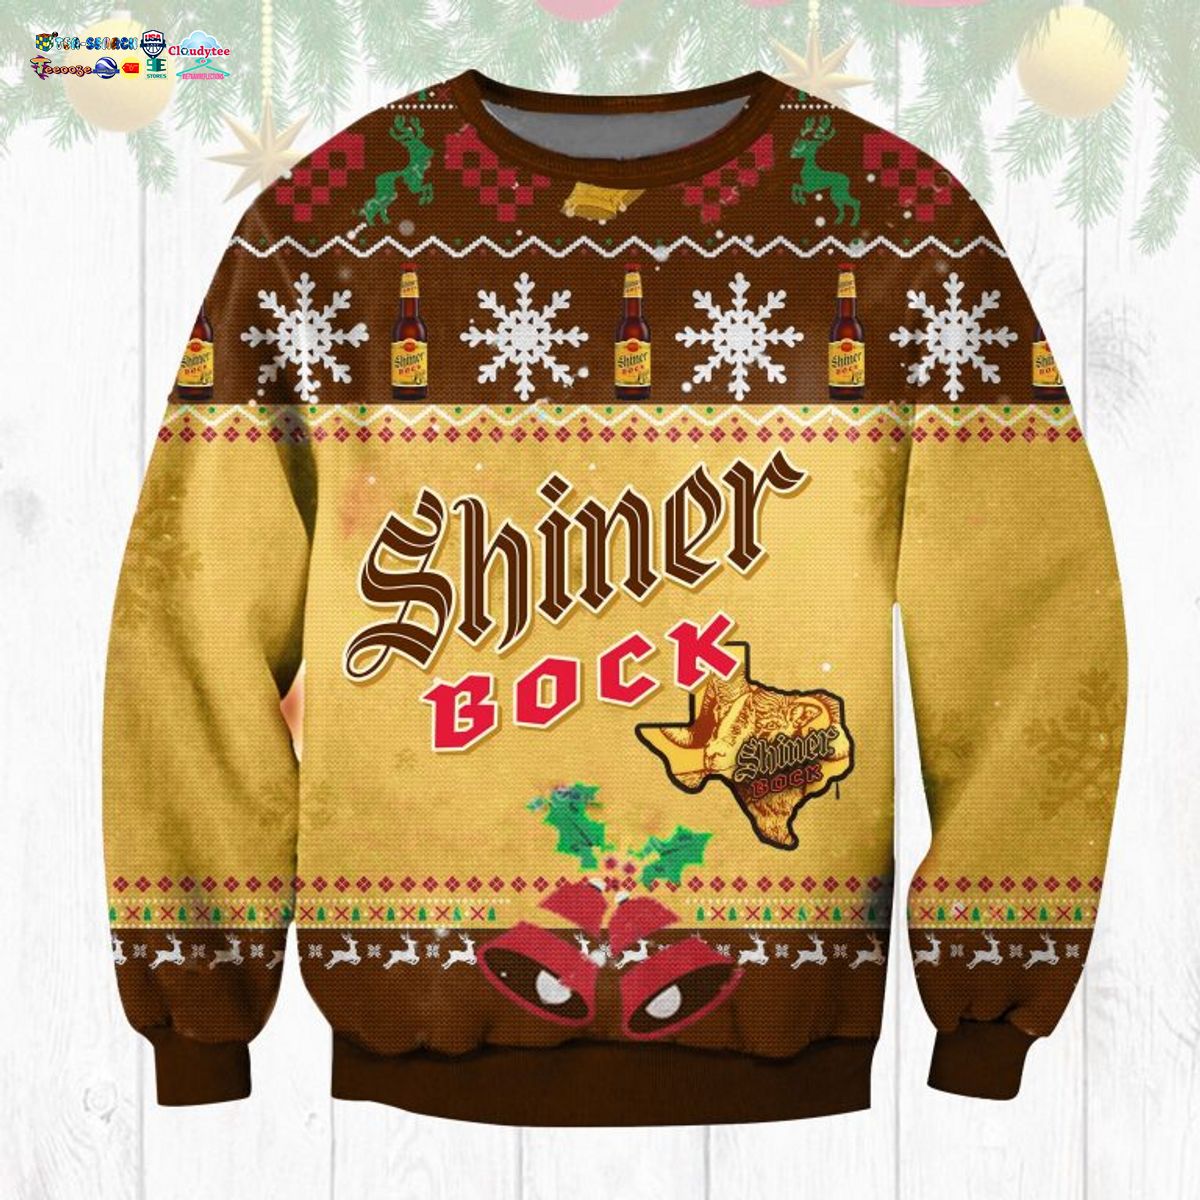 Shiner Bock Ugly Christmas Sweater